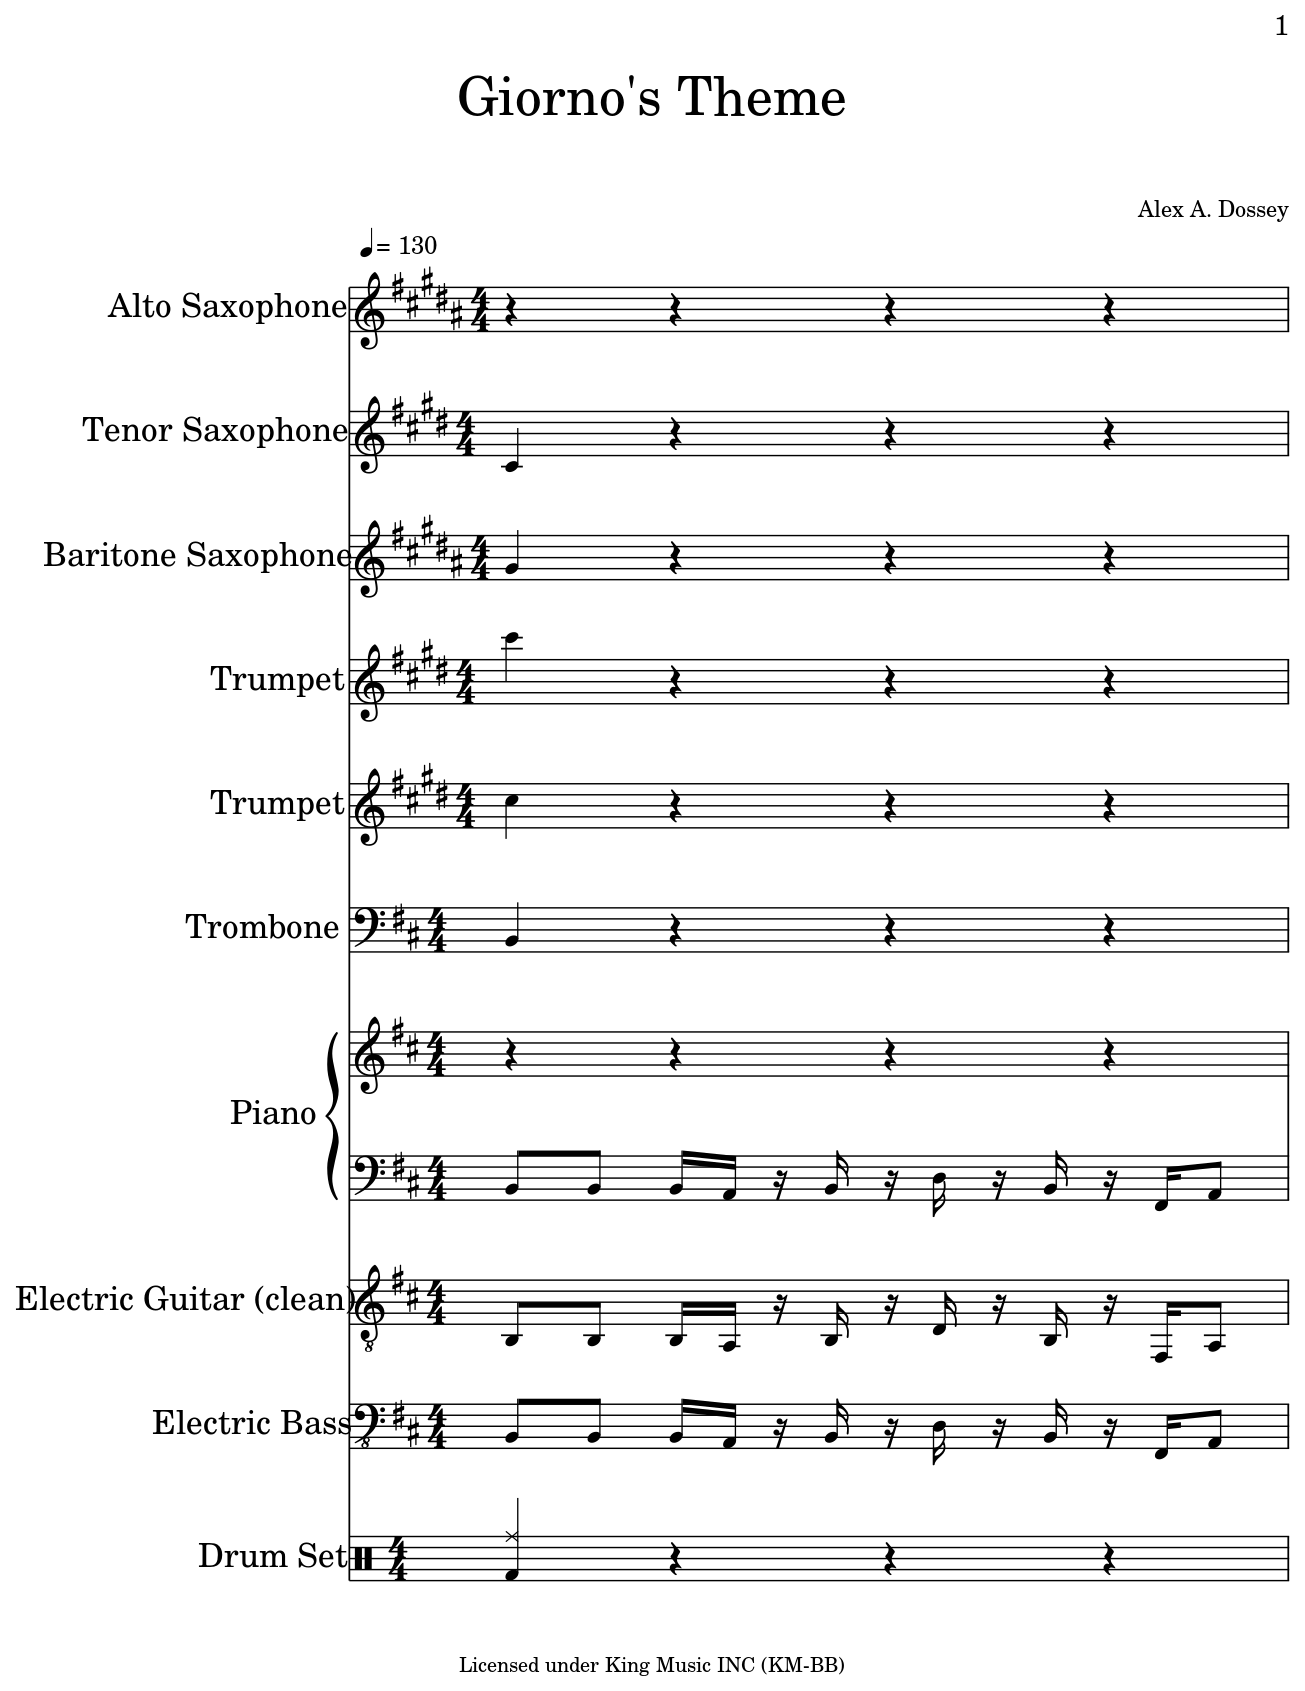 Giorno's Theme - Sheet music for Alto Saxophone, Tenor Saxophone, B...